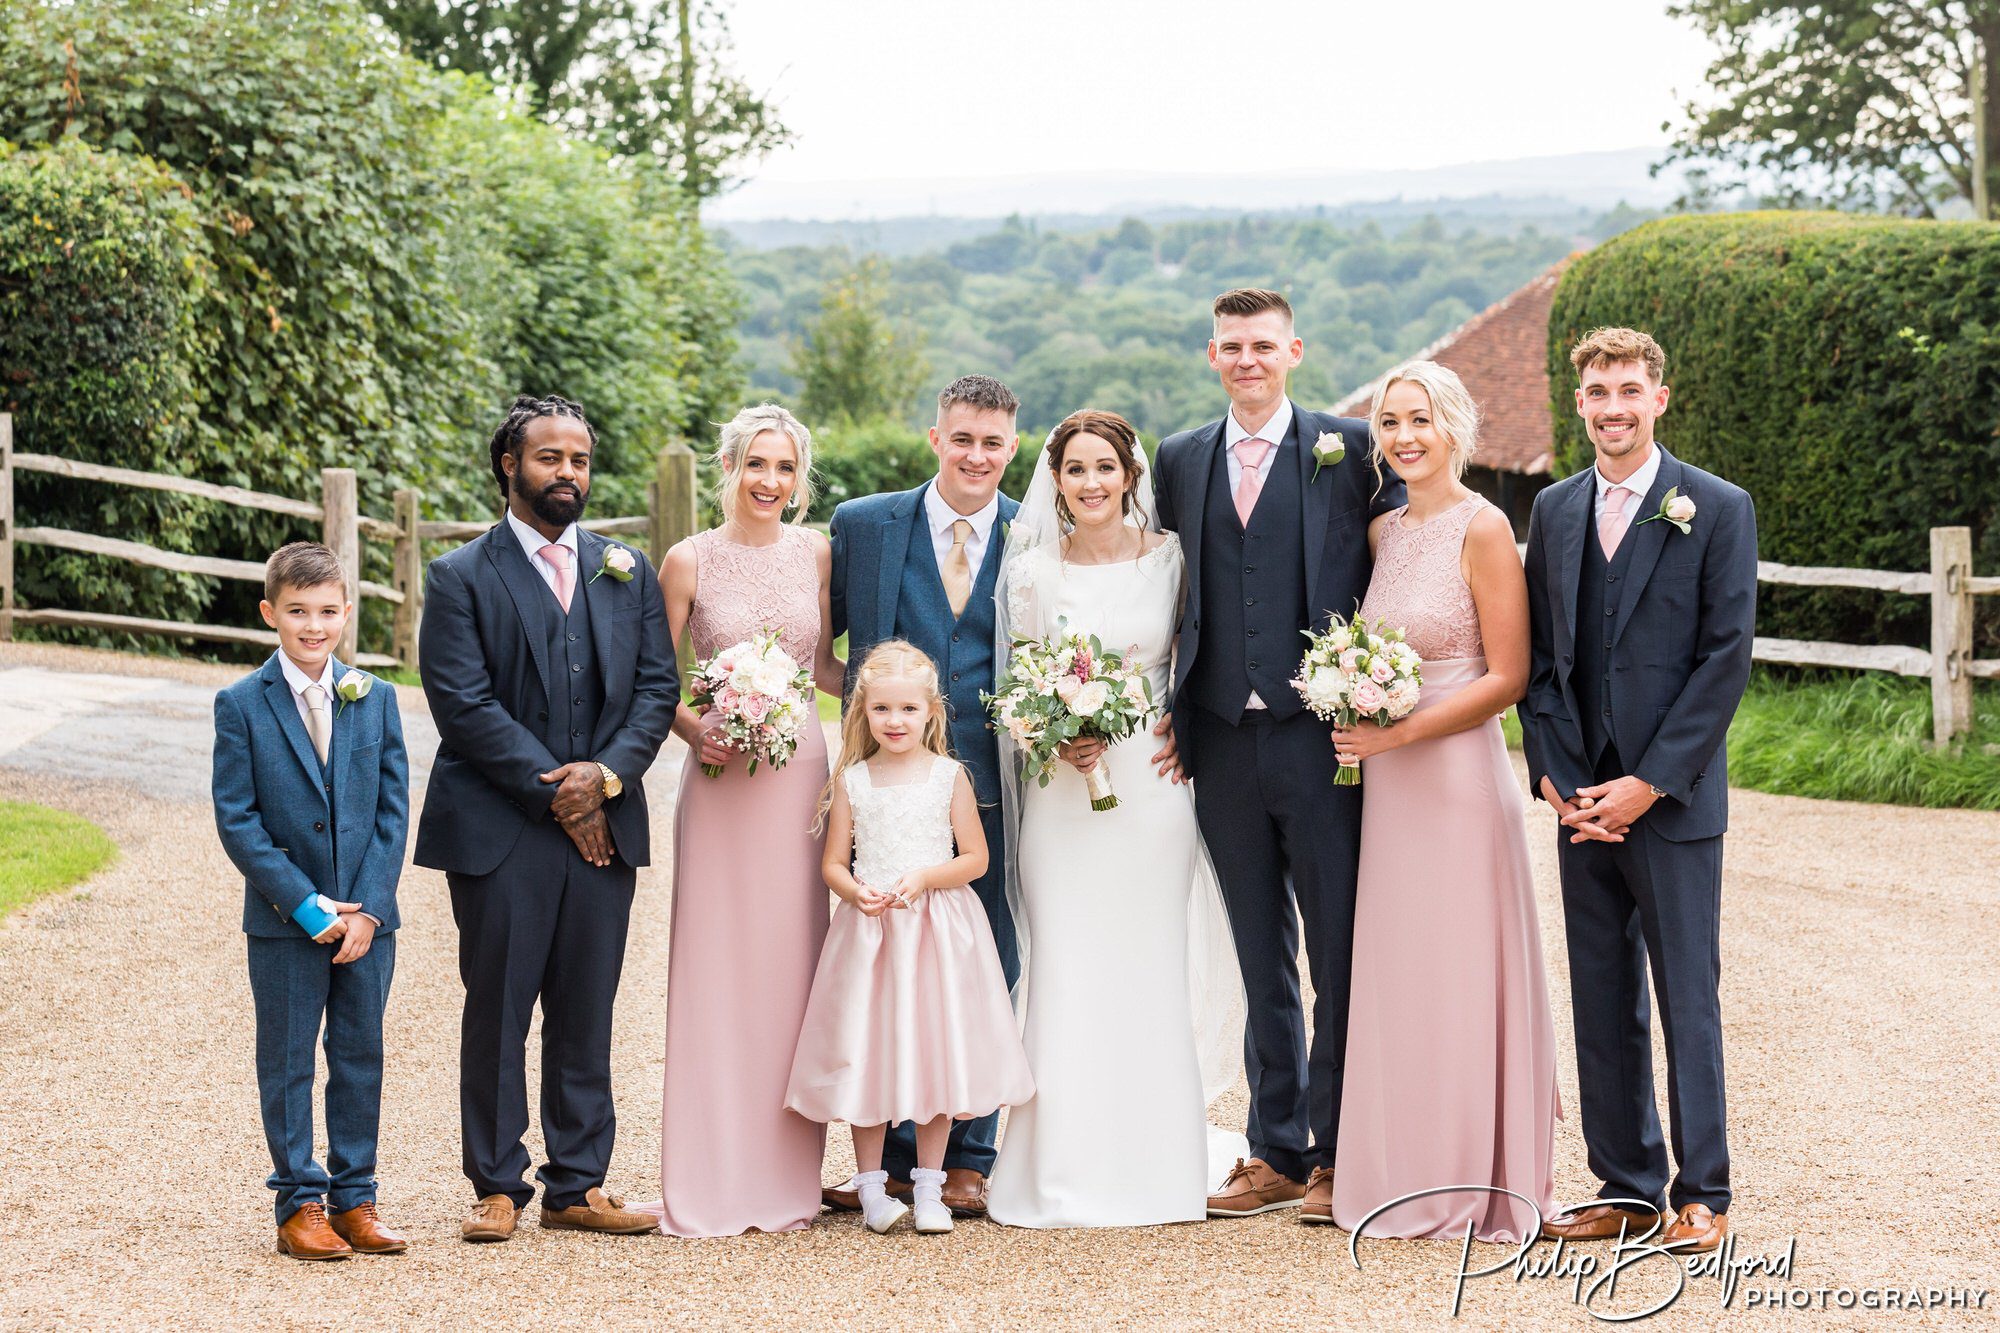 Chloe & Mathew, Hendall Manor Barns Wedding, East Sussex